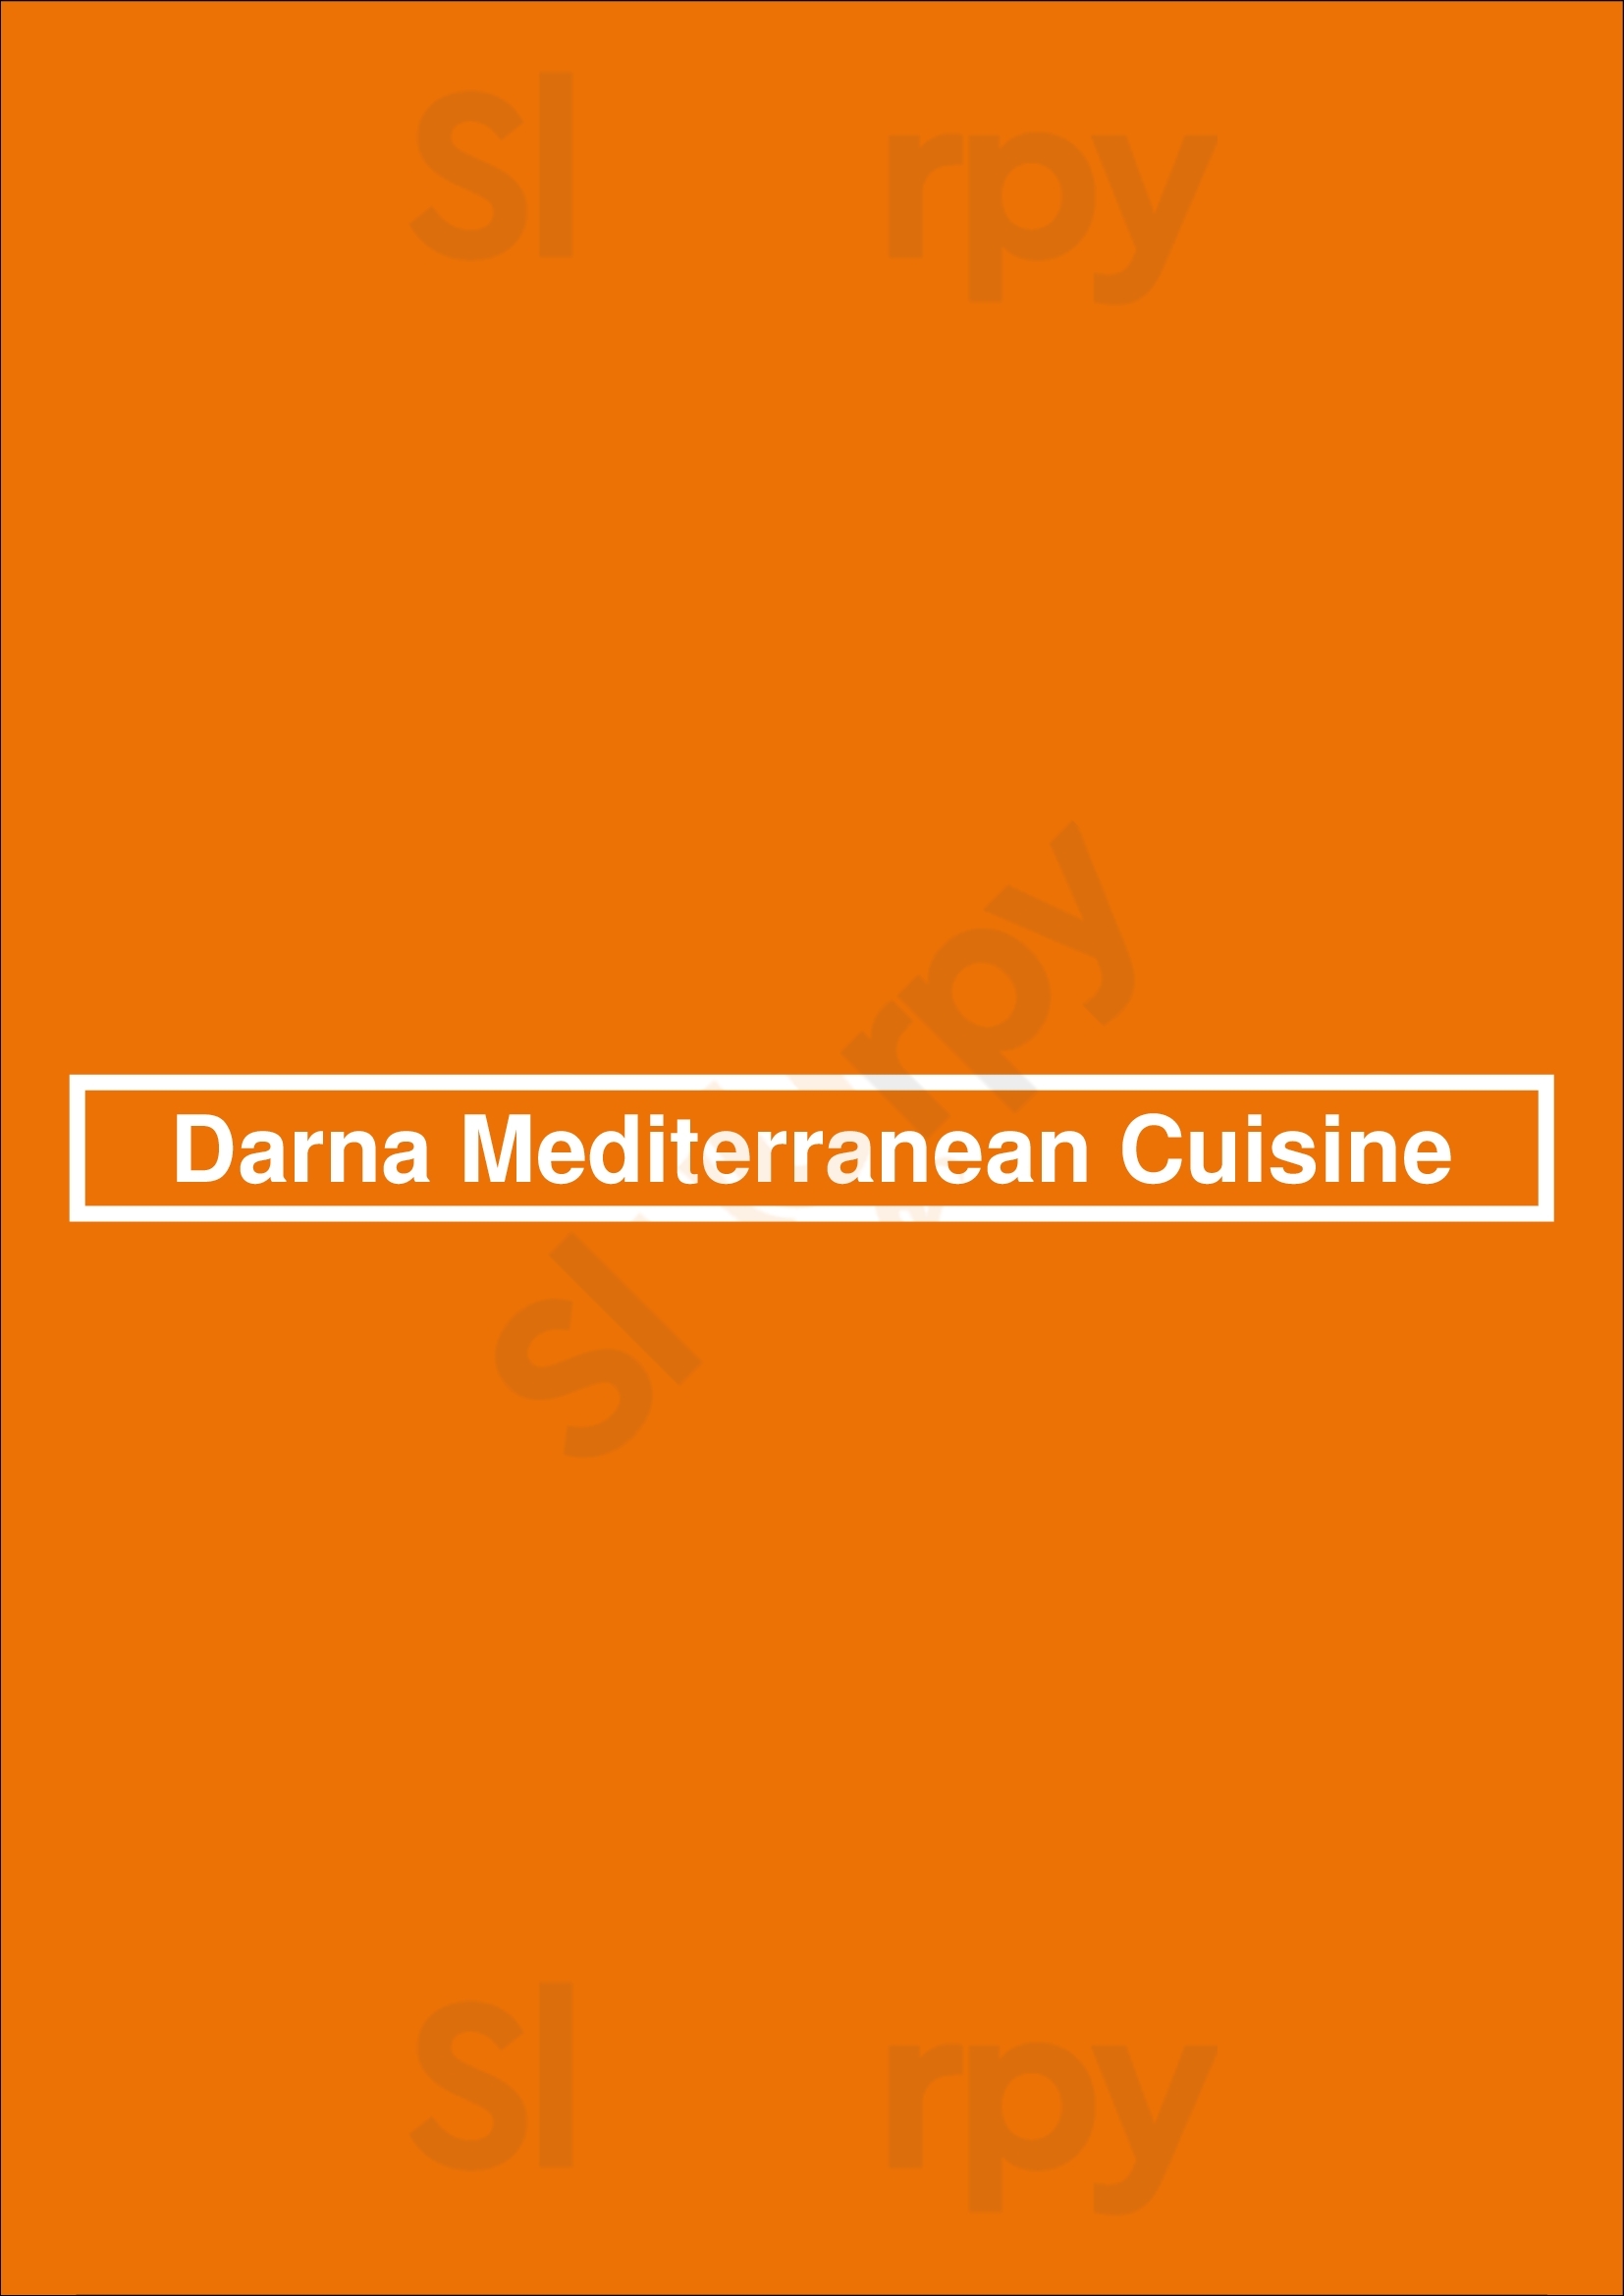 Darna Mediterranean Cuisine Los Angeles Menu - 1